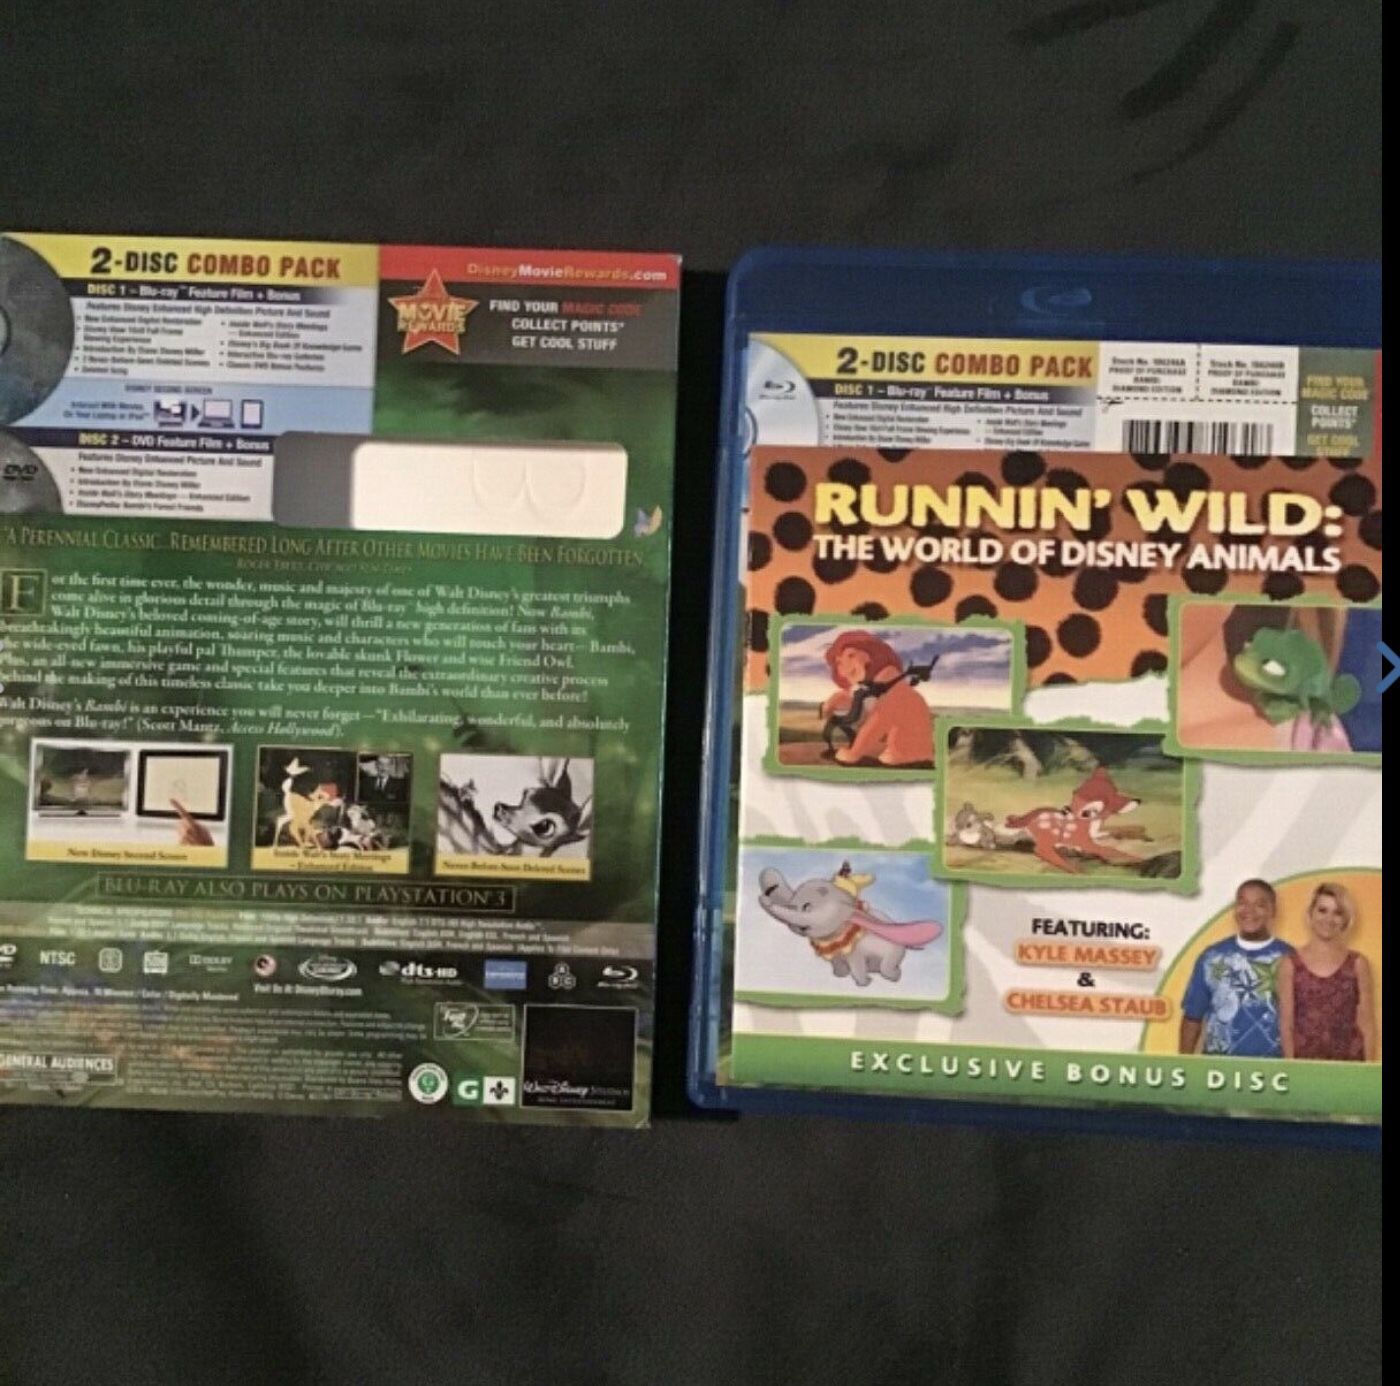 Bambi [Two-Disc Diamond Edition Blu-ray/DVD Combo] + Running Wild, 3 DVDs